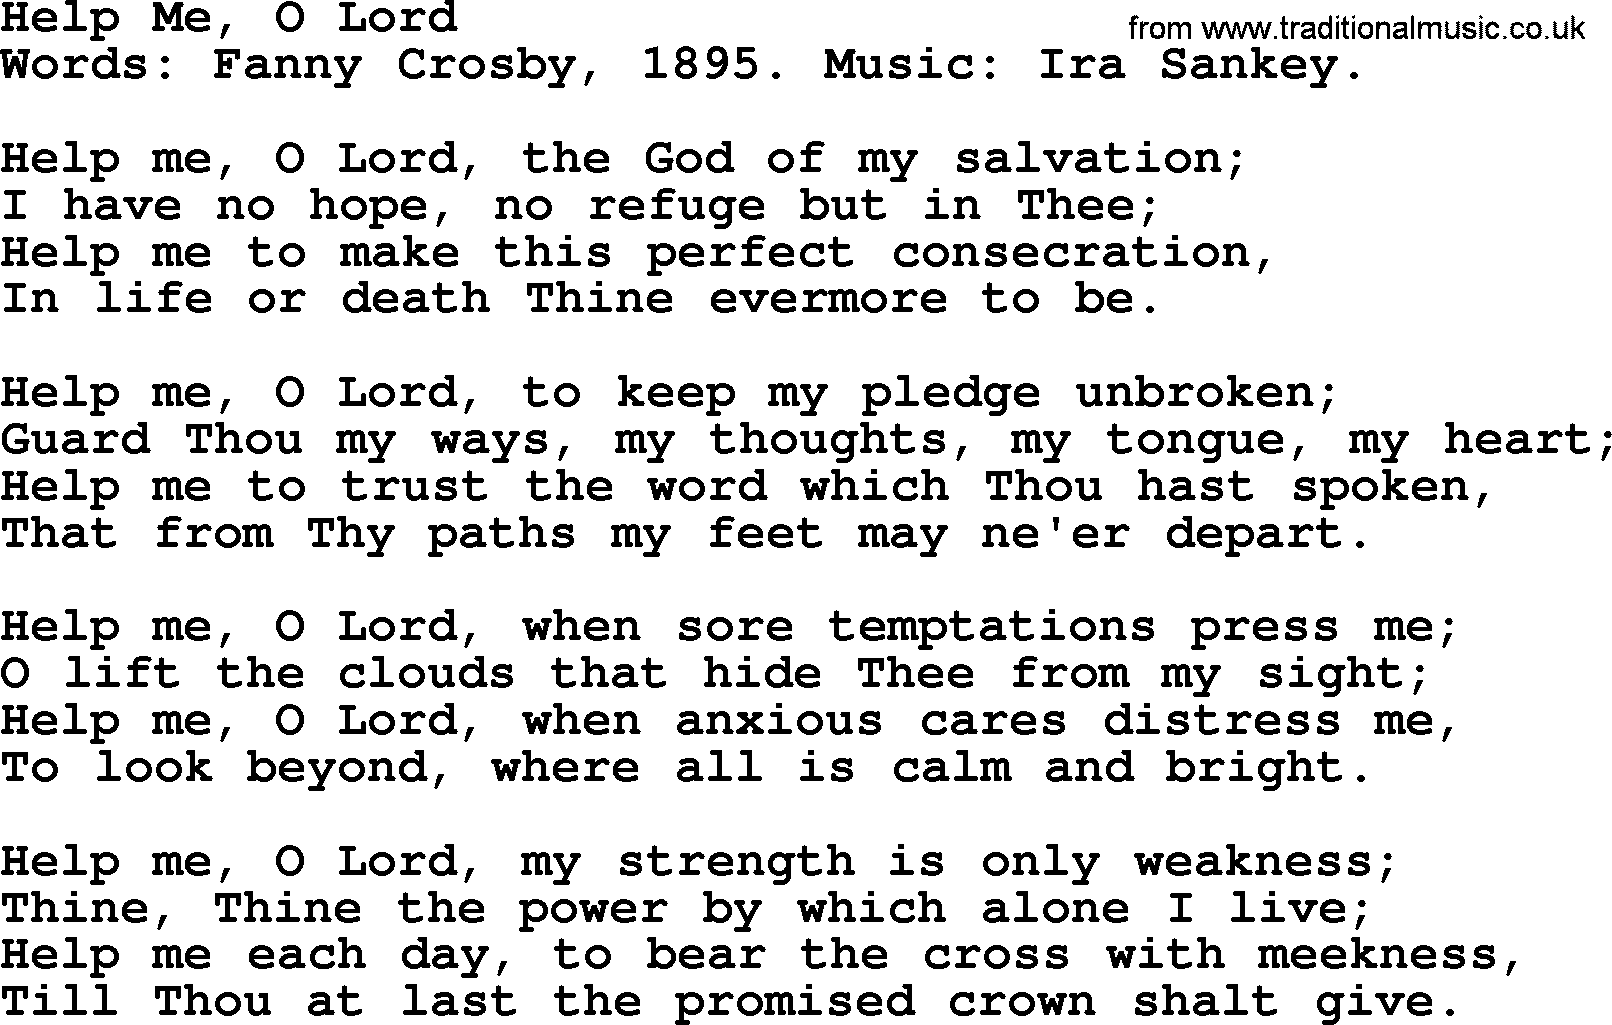 Fanny Crosby song: Help Me, O Lord, lyrics